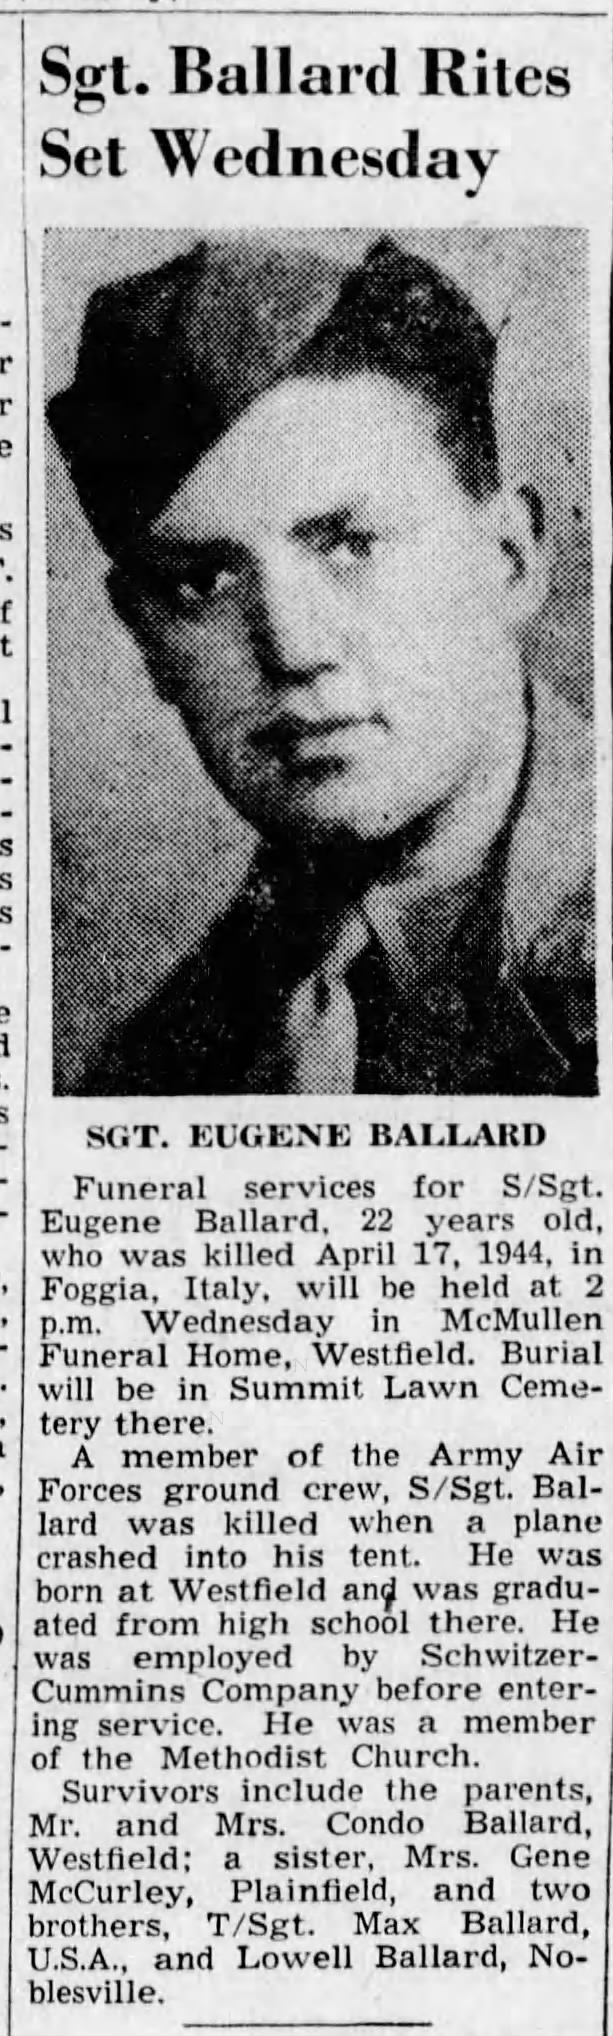 Eugene Ballard Funeral